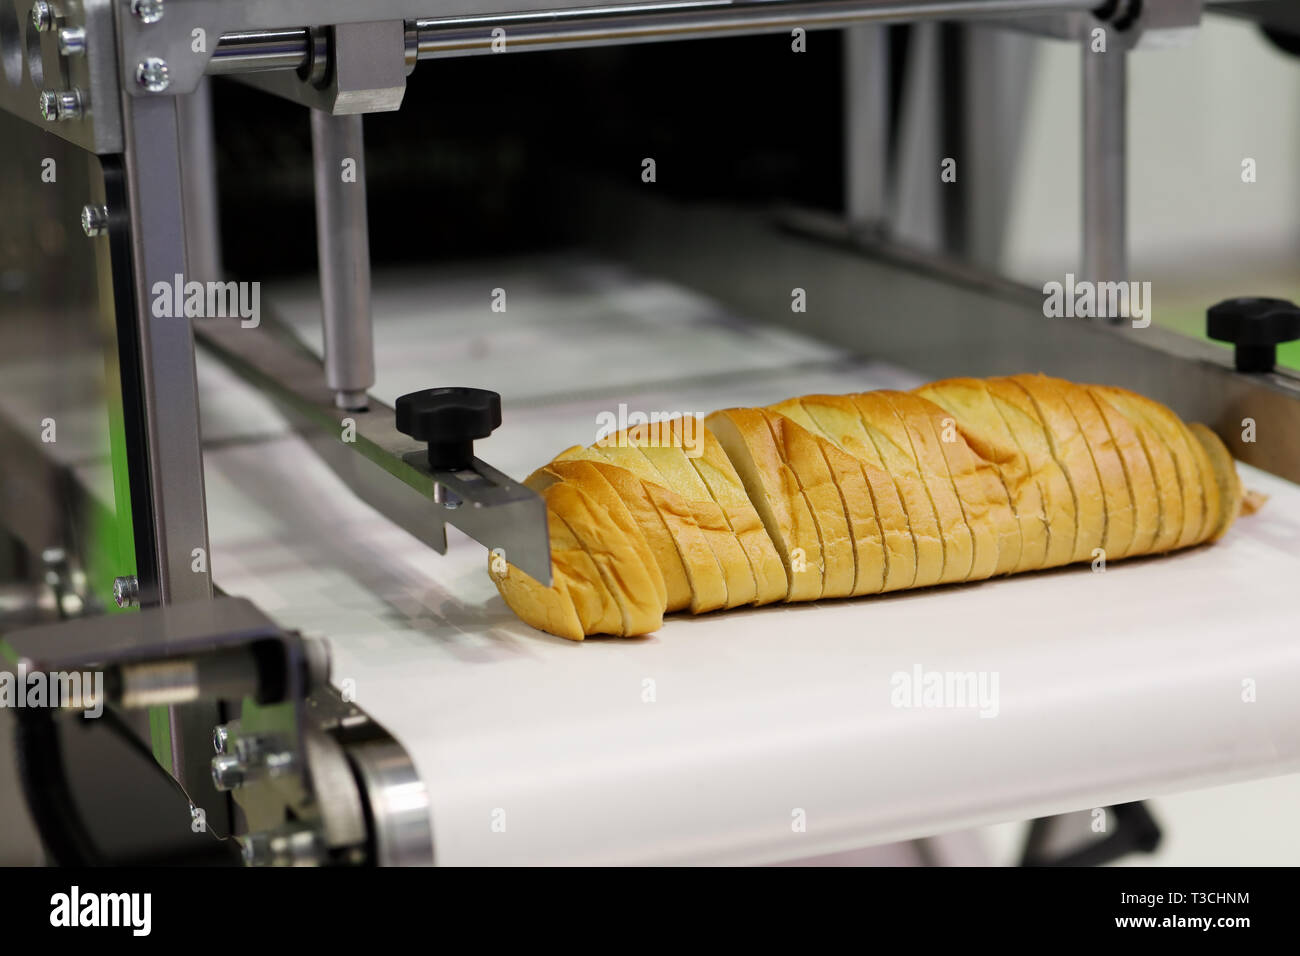 File:Bread slicing machine Foodtech Brødskjæremaskin EXTRA COOP Norway  2017-11-02 loaf of brad into machine.jpg - Wikimedia Commons